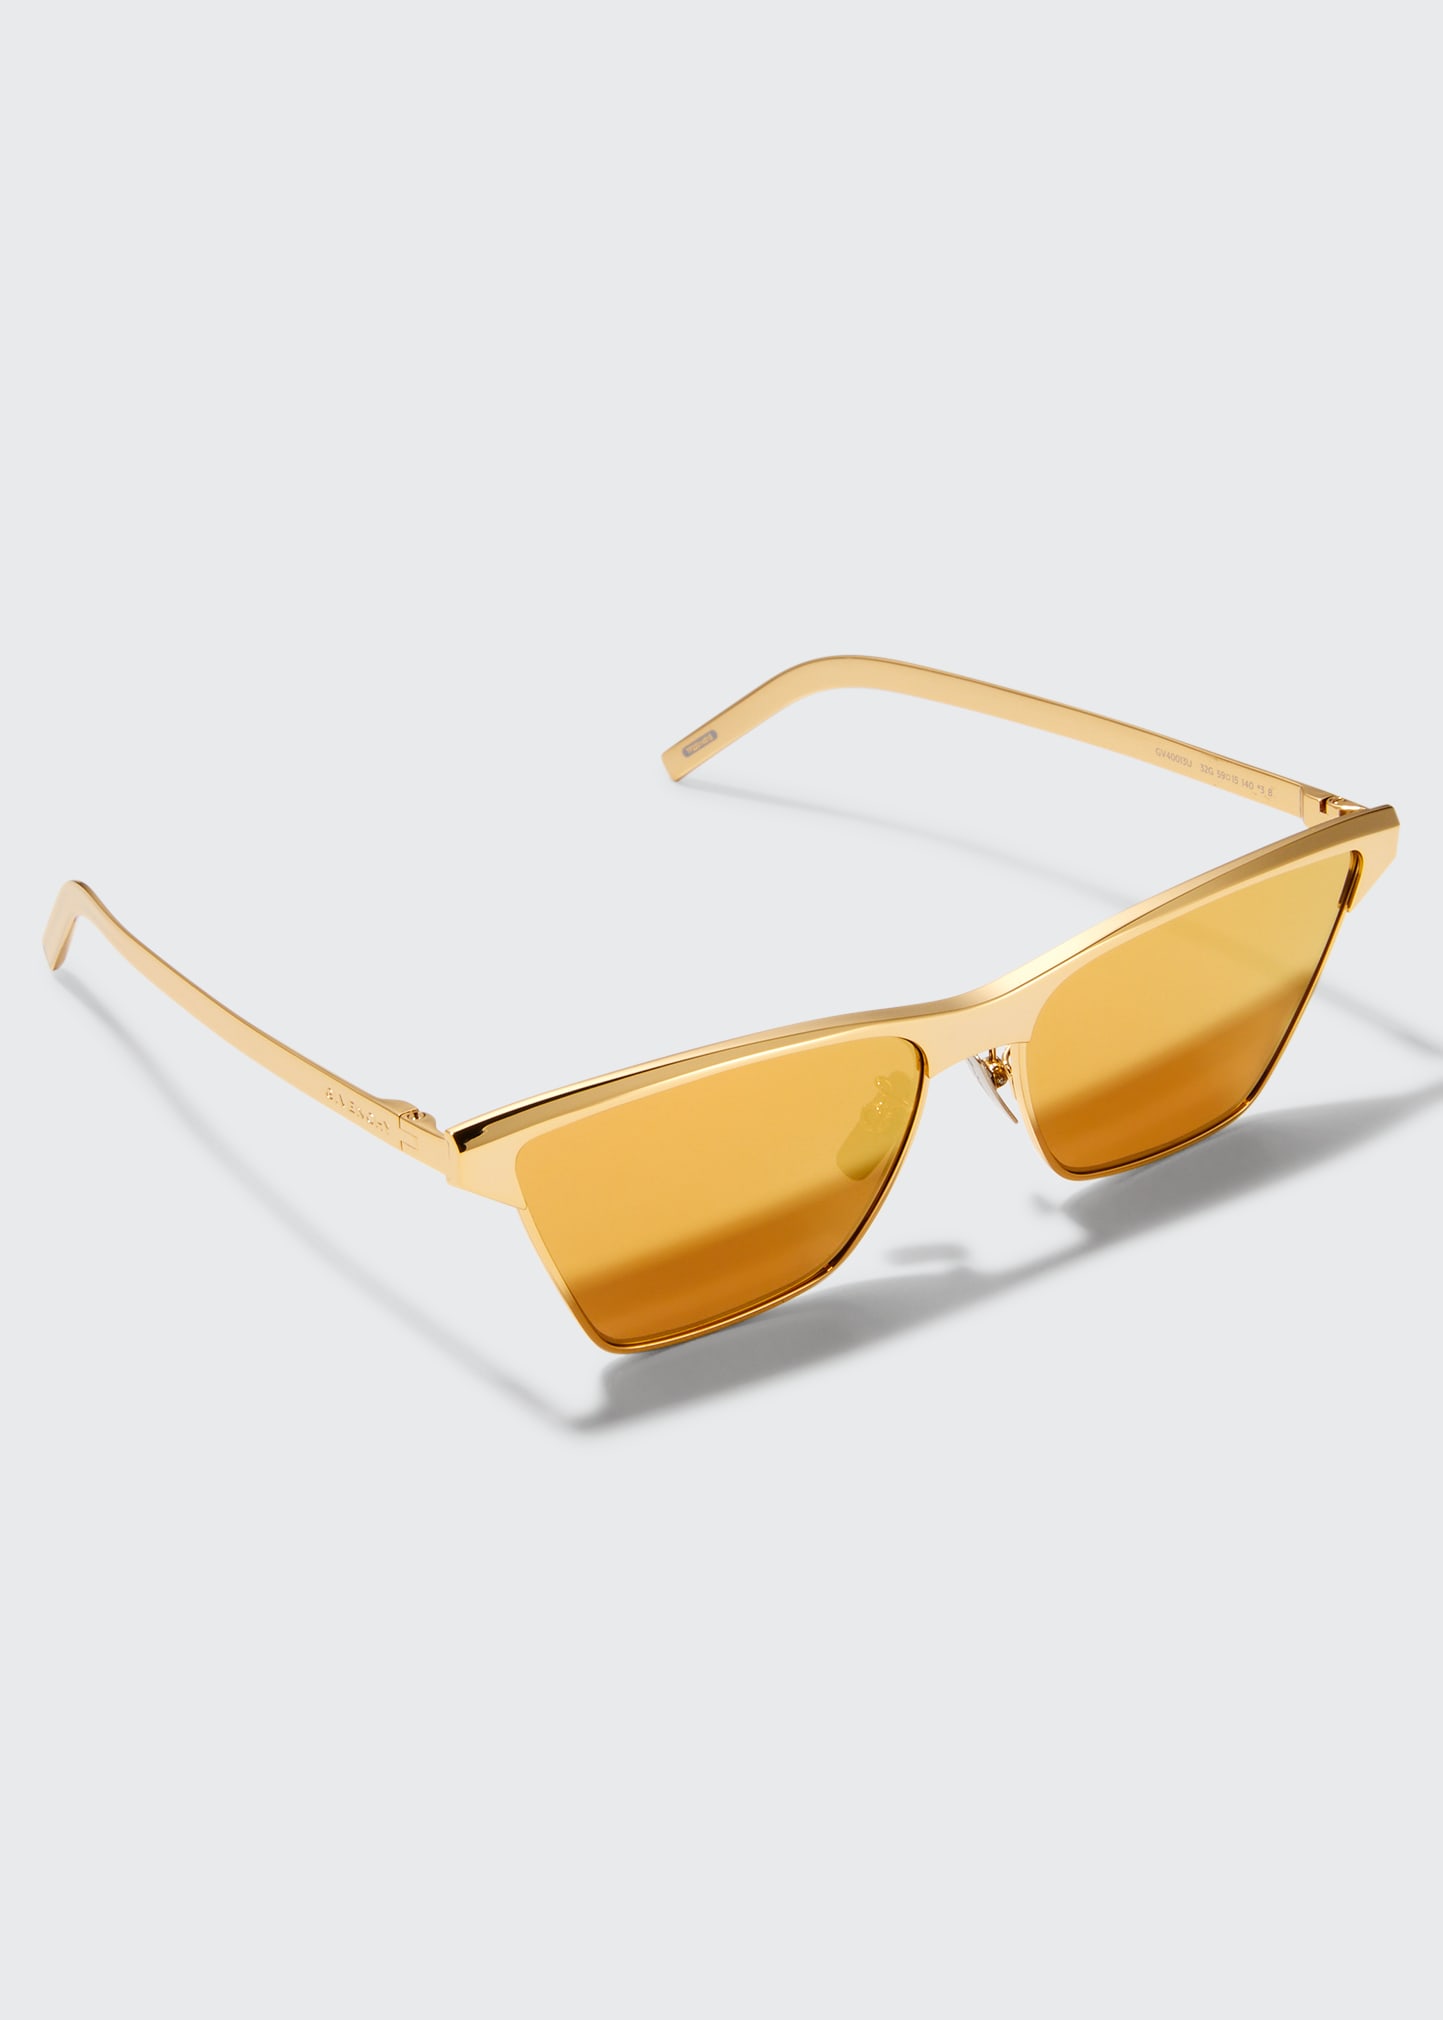 Givenchy Men's Metal Engraved Logo Rectangle Sunglasses In 32g Gldbrnmr